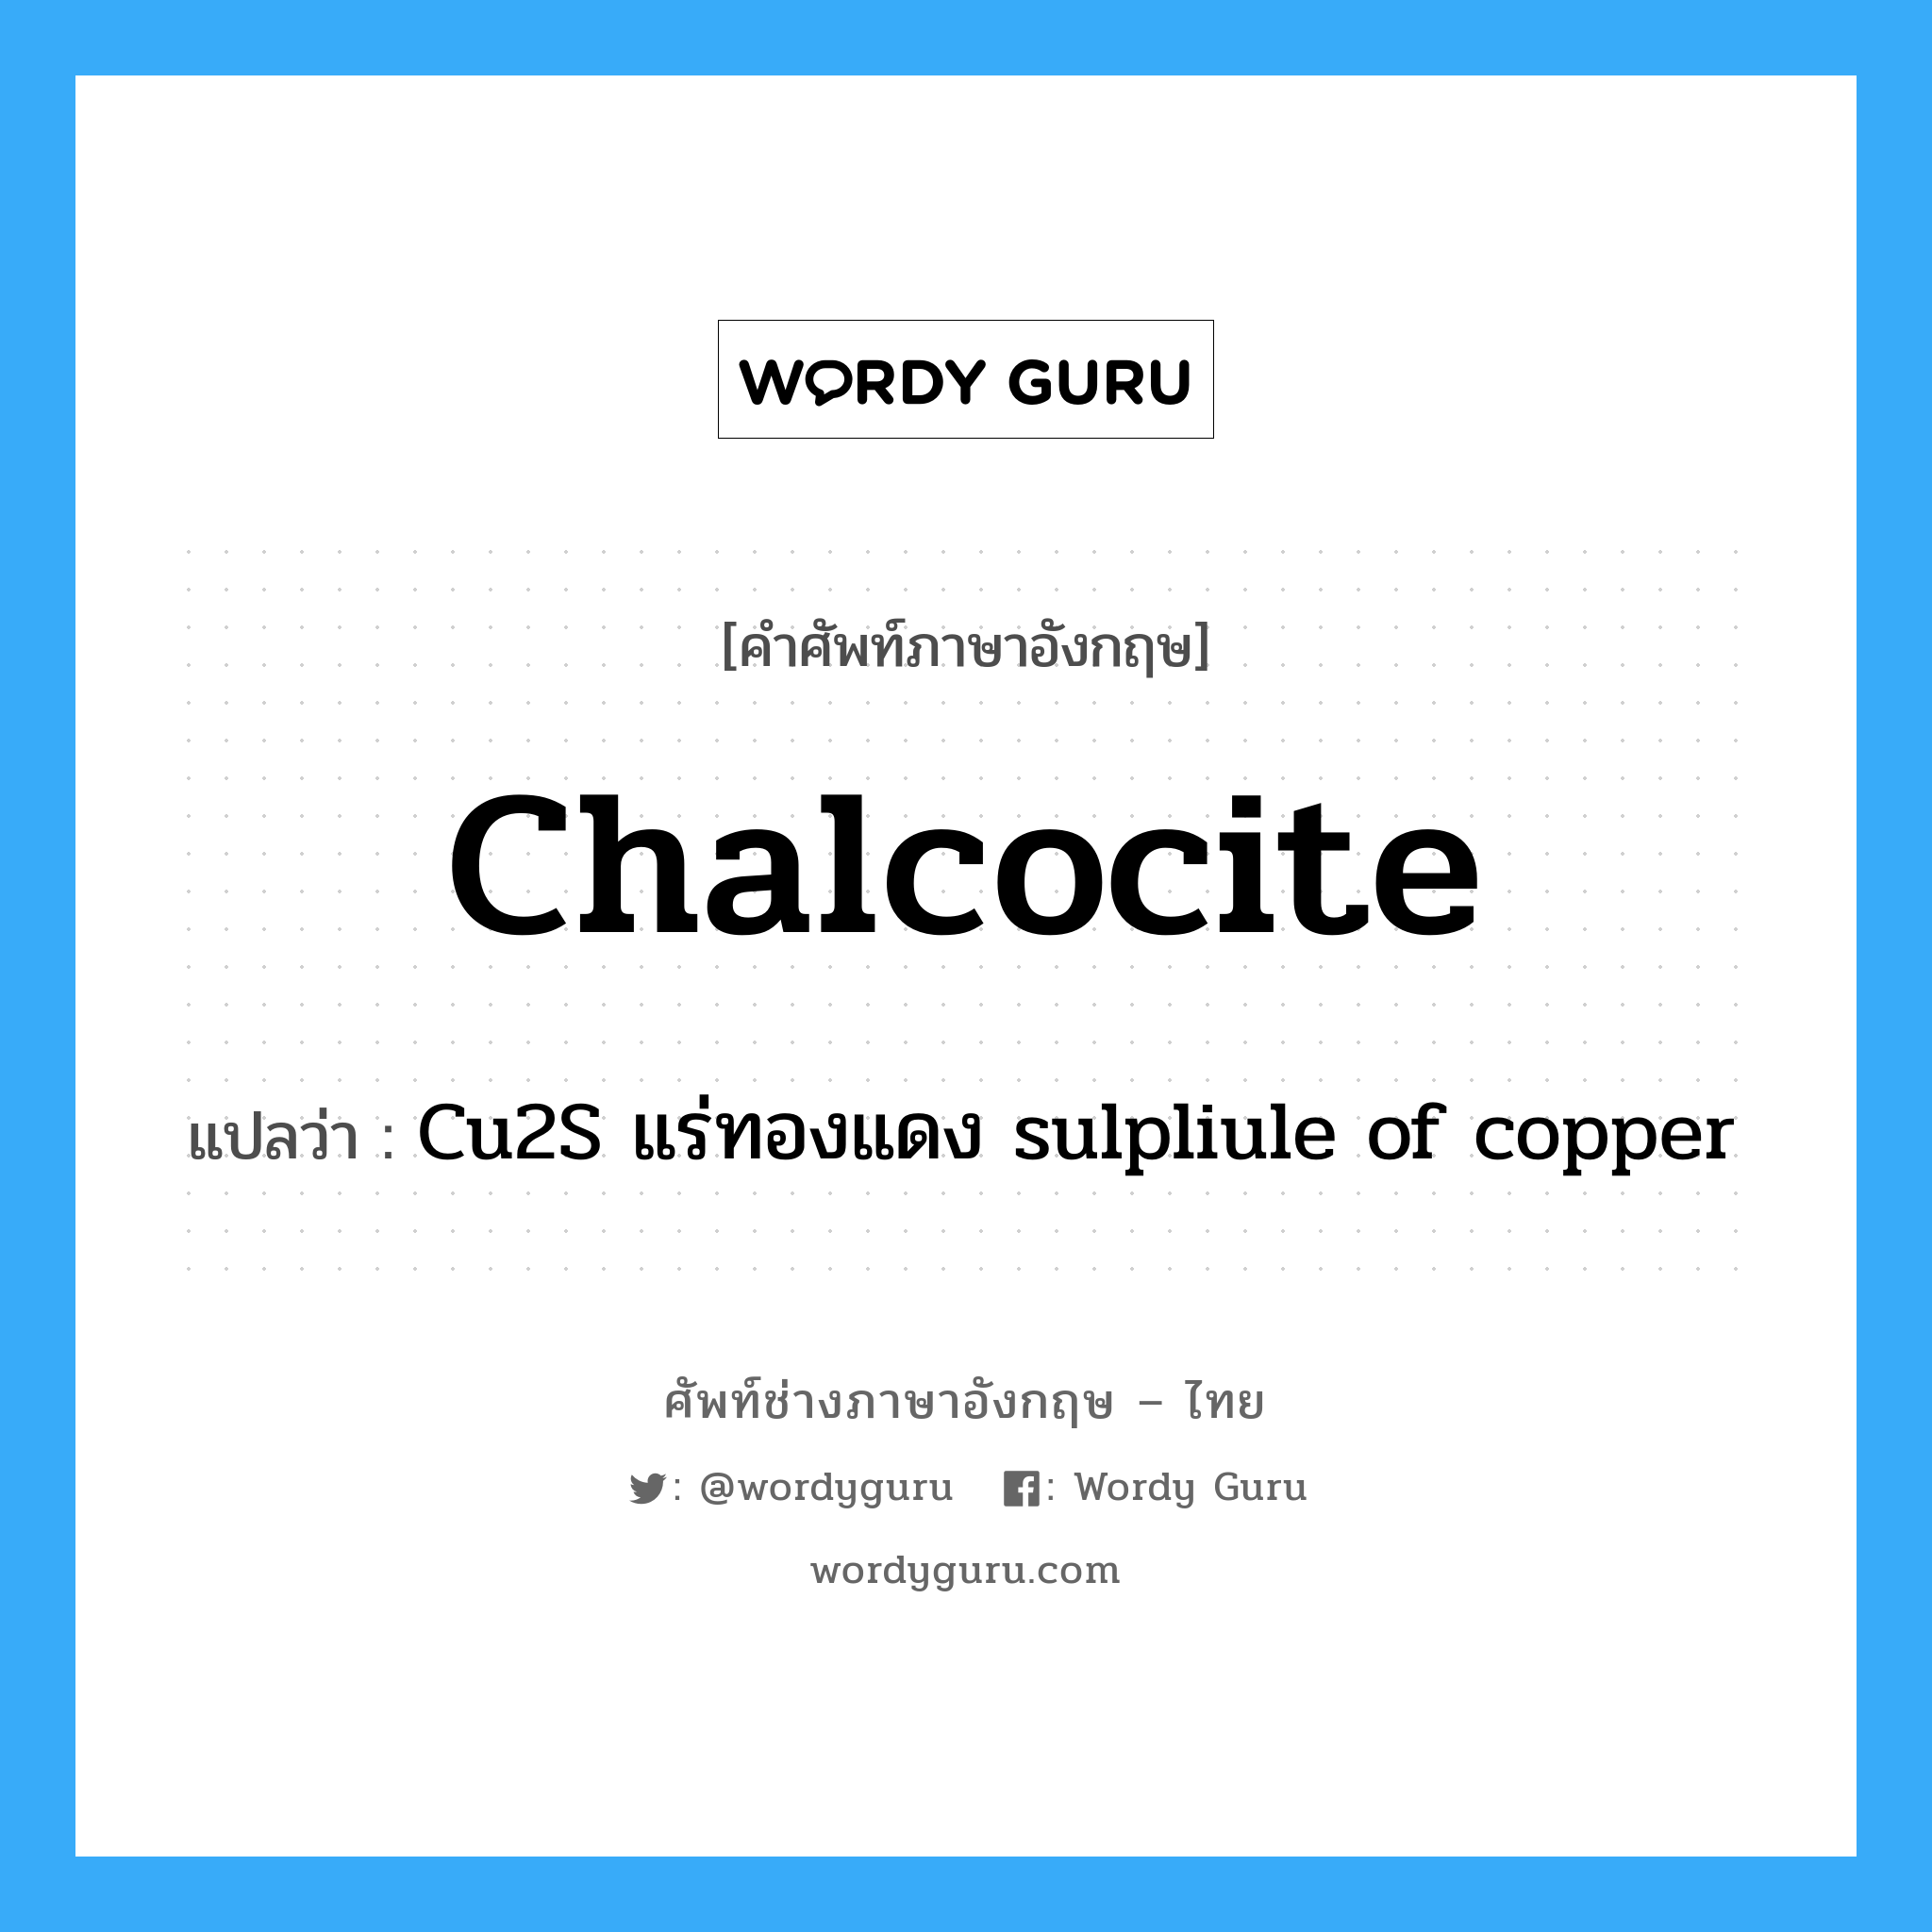 Cu2S แร่ทองแดง sulpliule of copper ภาษาอังกฤษ?, คำศัพท์ช่างภาษาอังกฤษ - ไทย Cu2S แร่ทองแดง sulpliule of copper คำศัพท์ภาษาอังกฤษ Cu2S แร่ทองแดง sulpliule of copper แปลว่า chalcocite